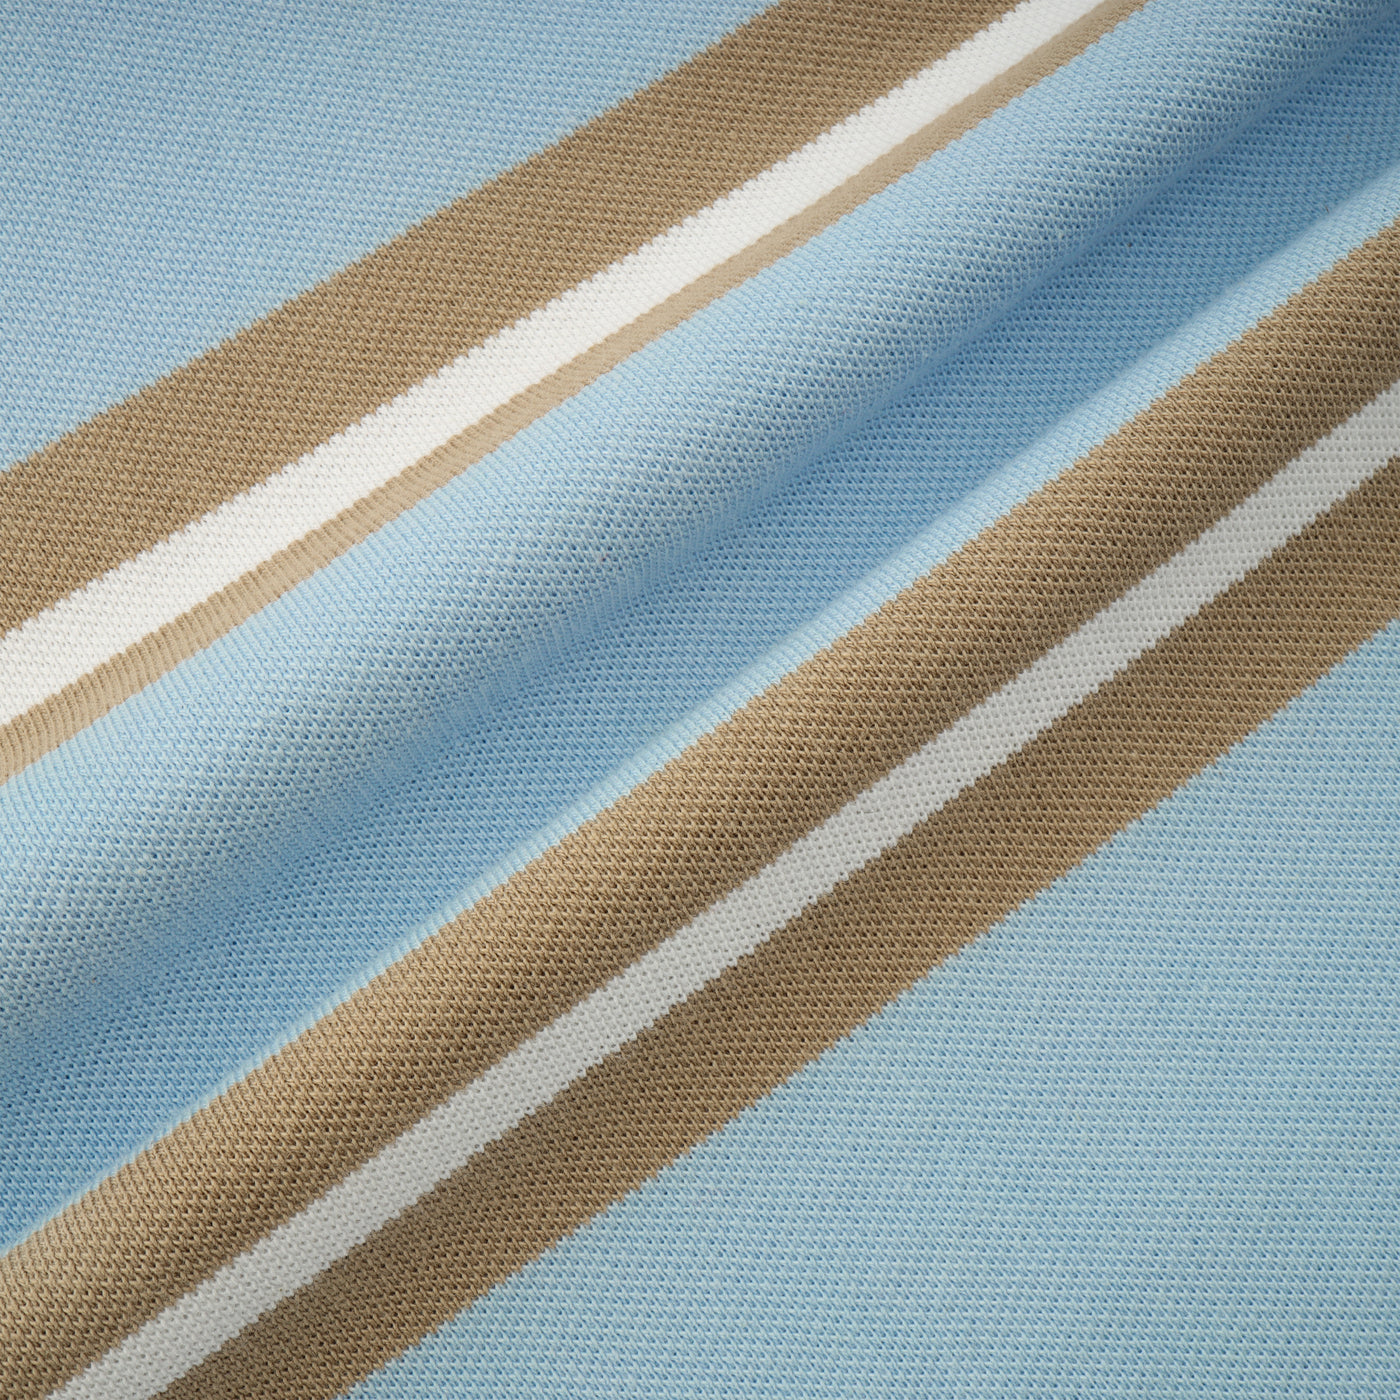 Pique Striped Light Blue Cotton Polo